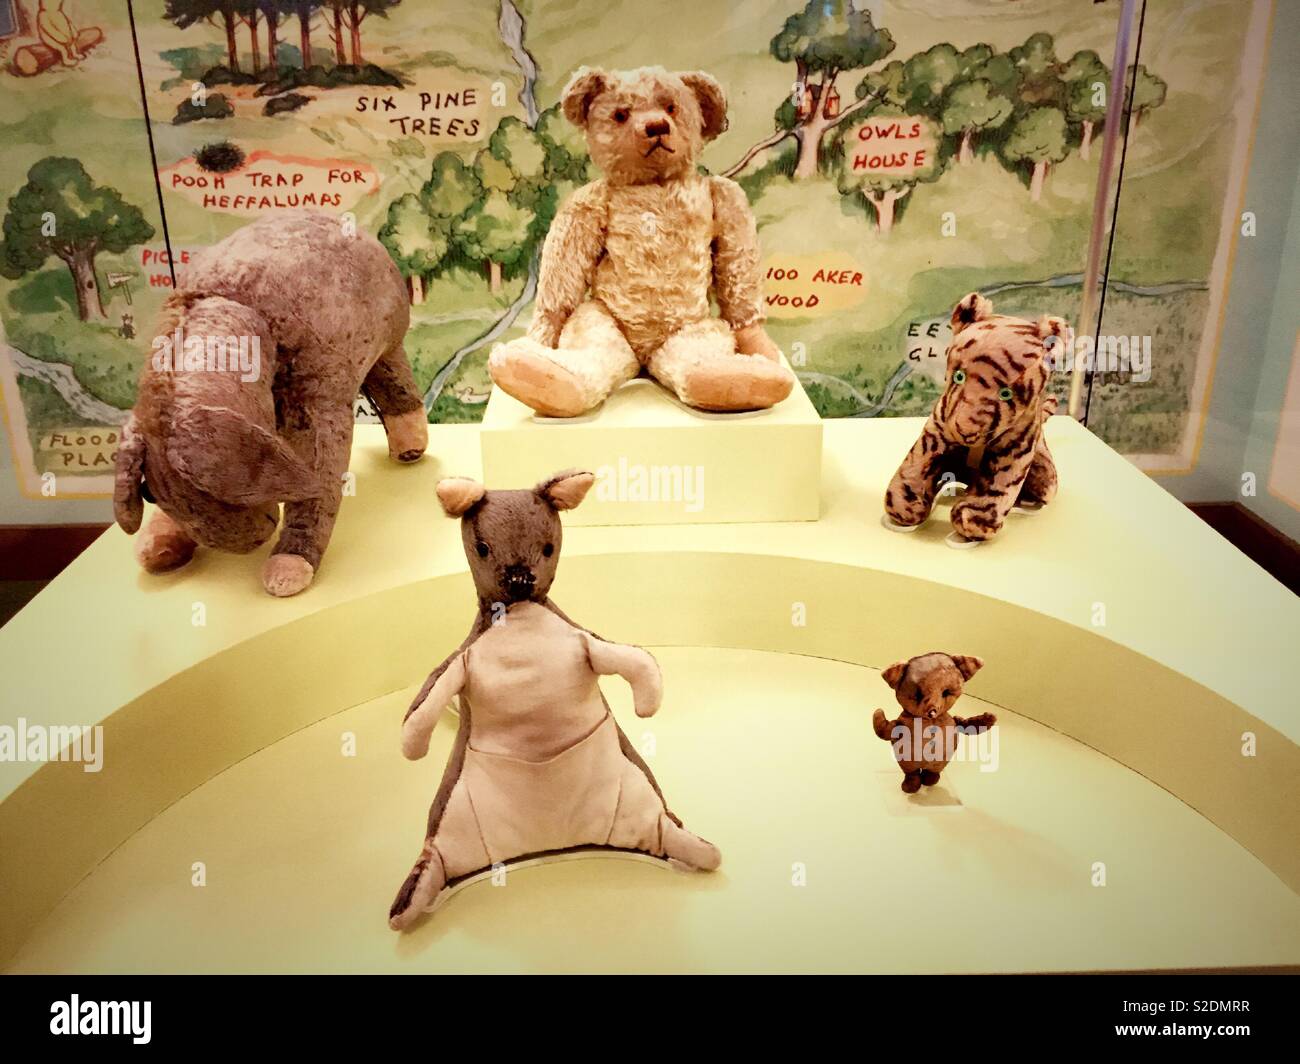 Winnie the Pooh stuffed animal display at New York Public Library, NYC, USA  Stock Photo - Alamy